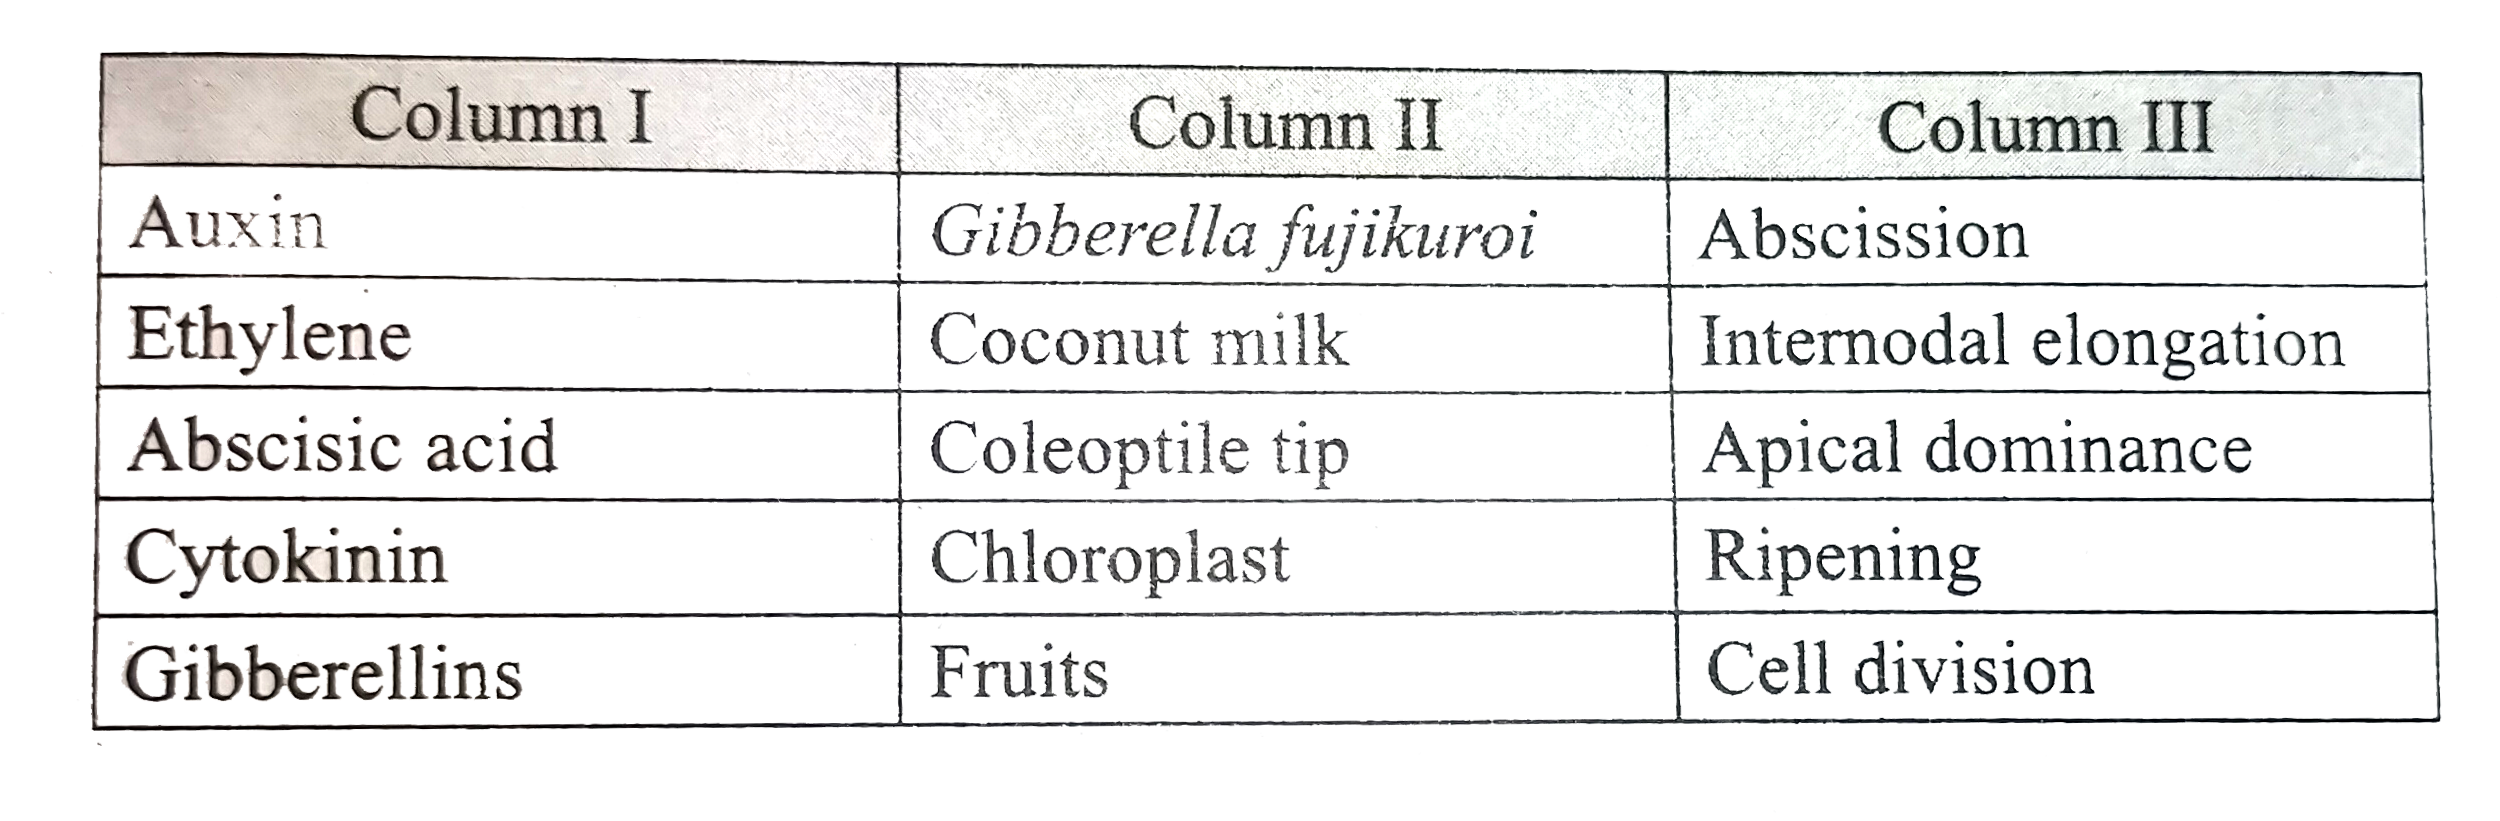 Match Column I with Columns II and III